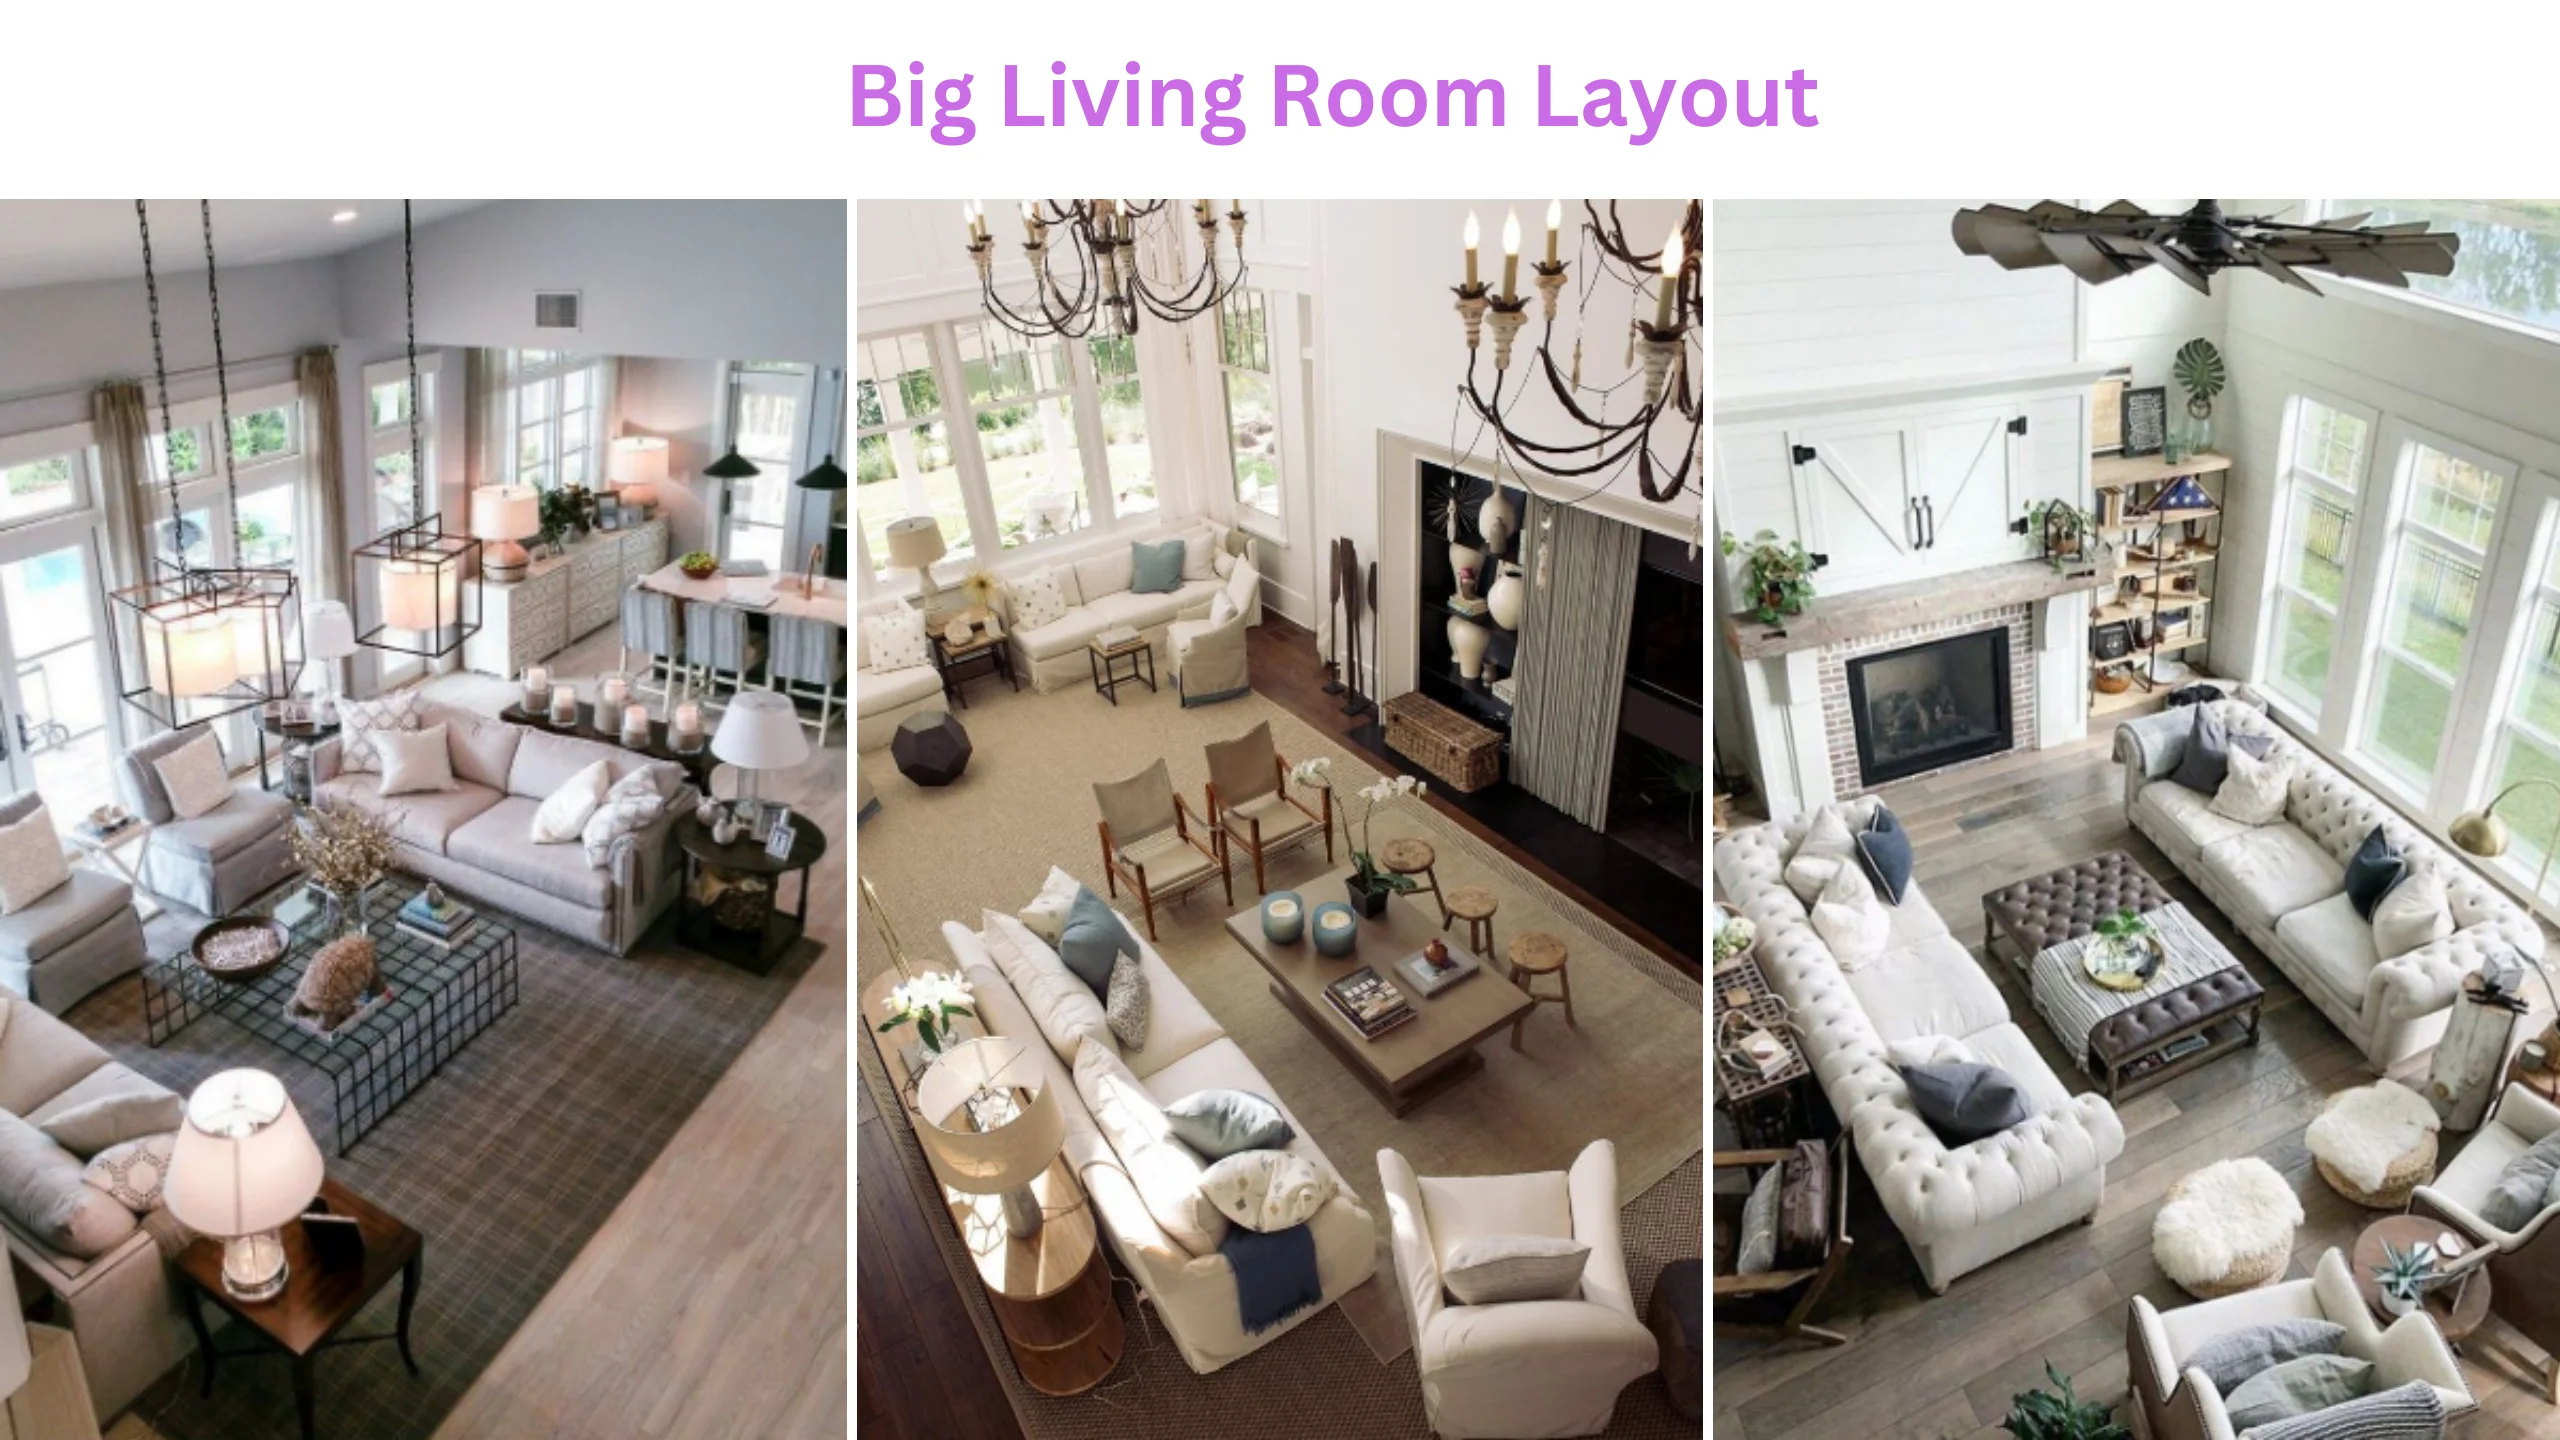 Big living room layout